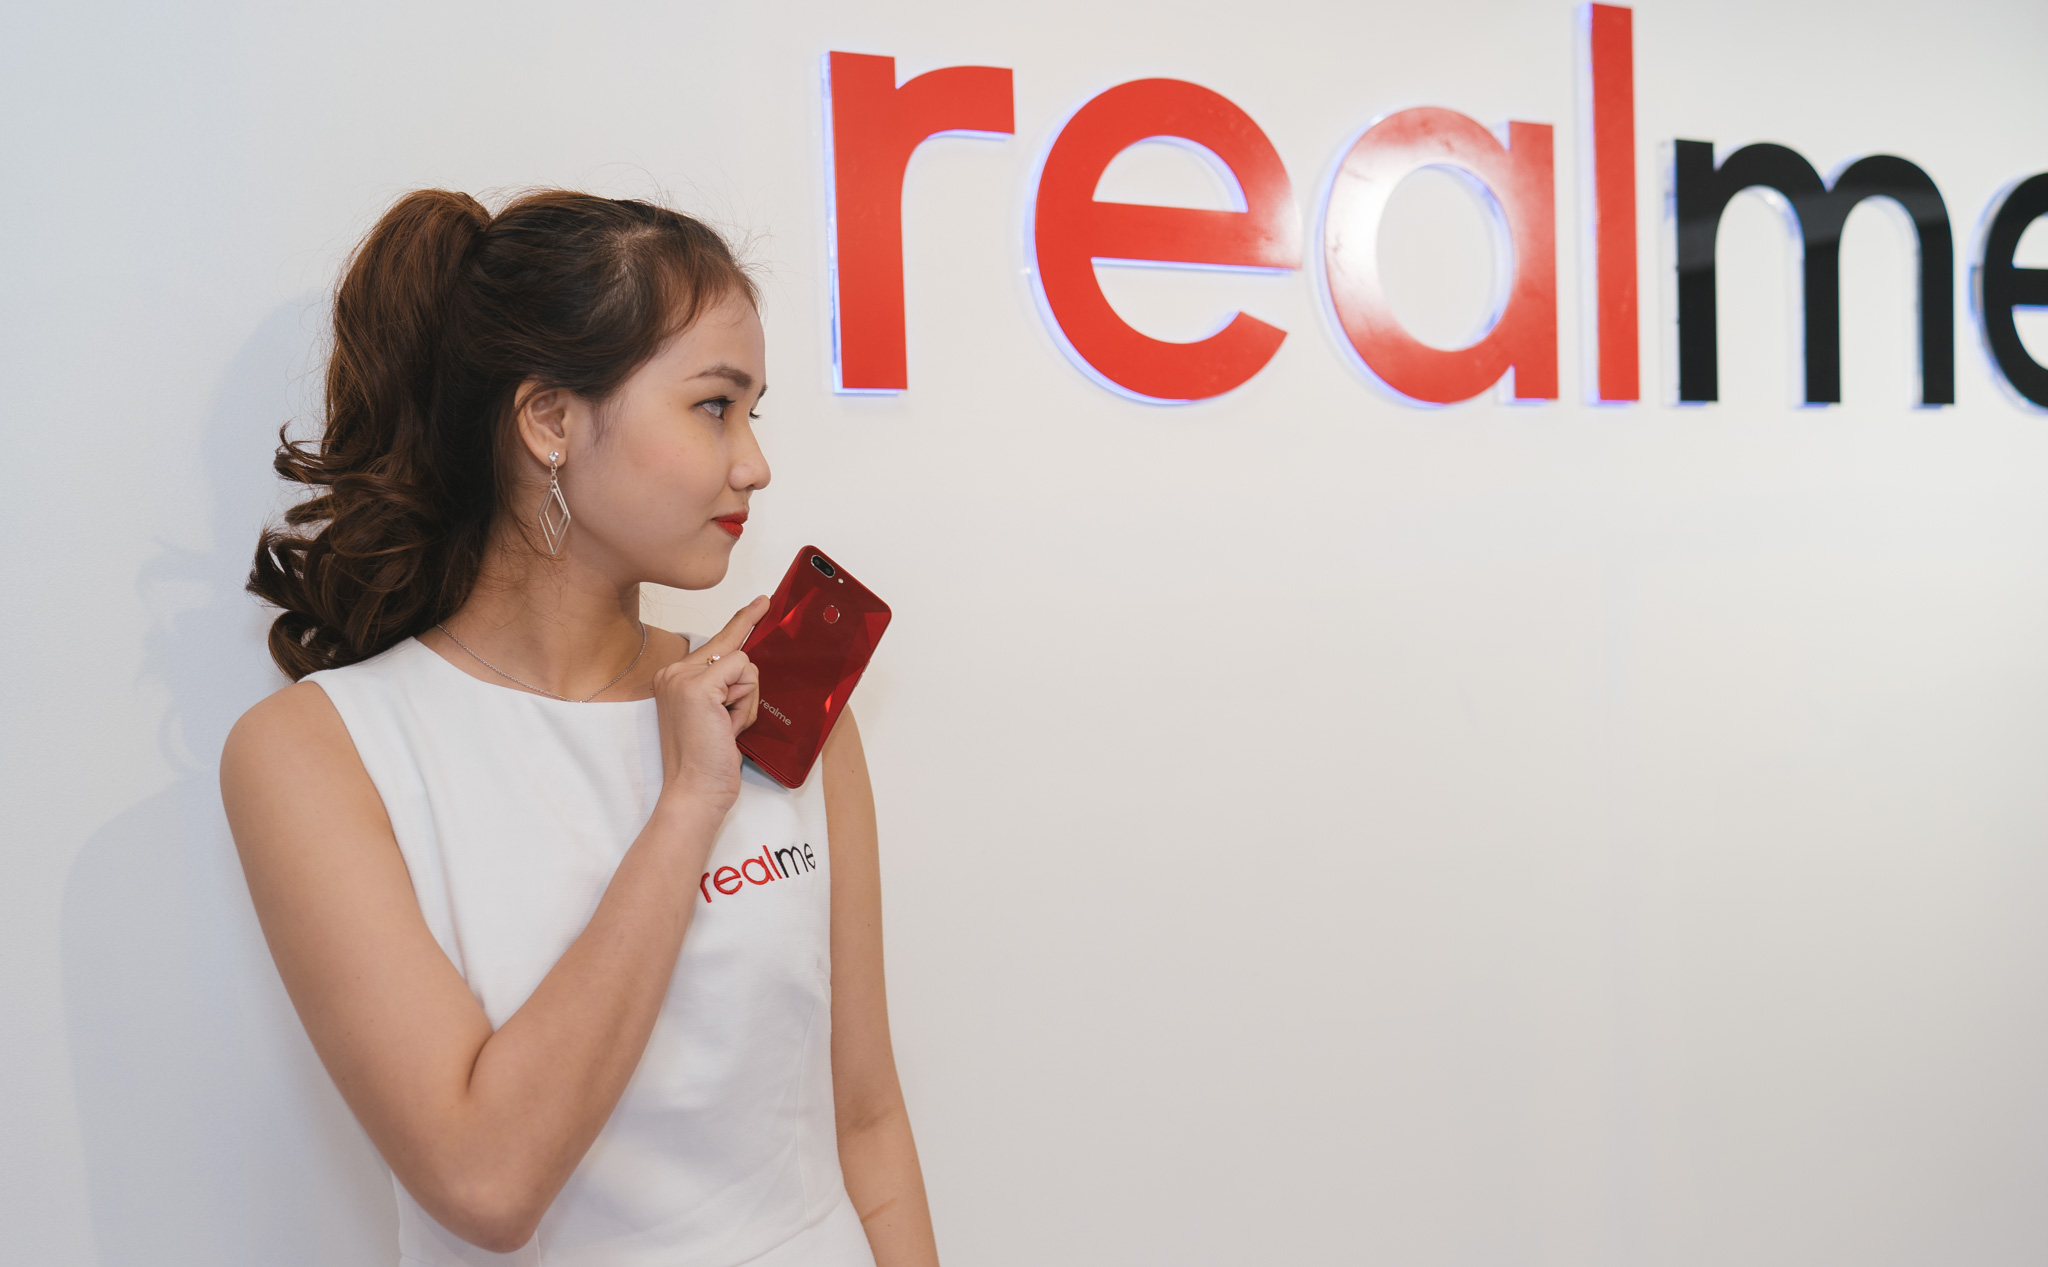 Realme Việt Nam ra mắt 3 smartphone giá hấp dẫn cho giới trẻ: Realme C1, Realme 2 và Realme 2 Pro